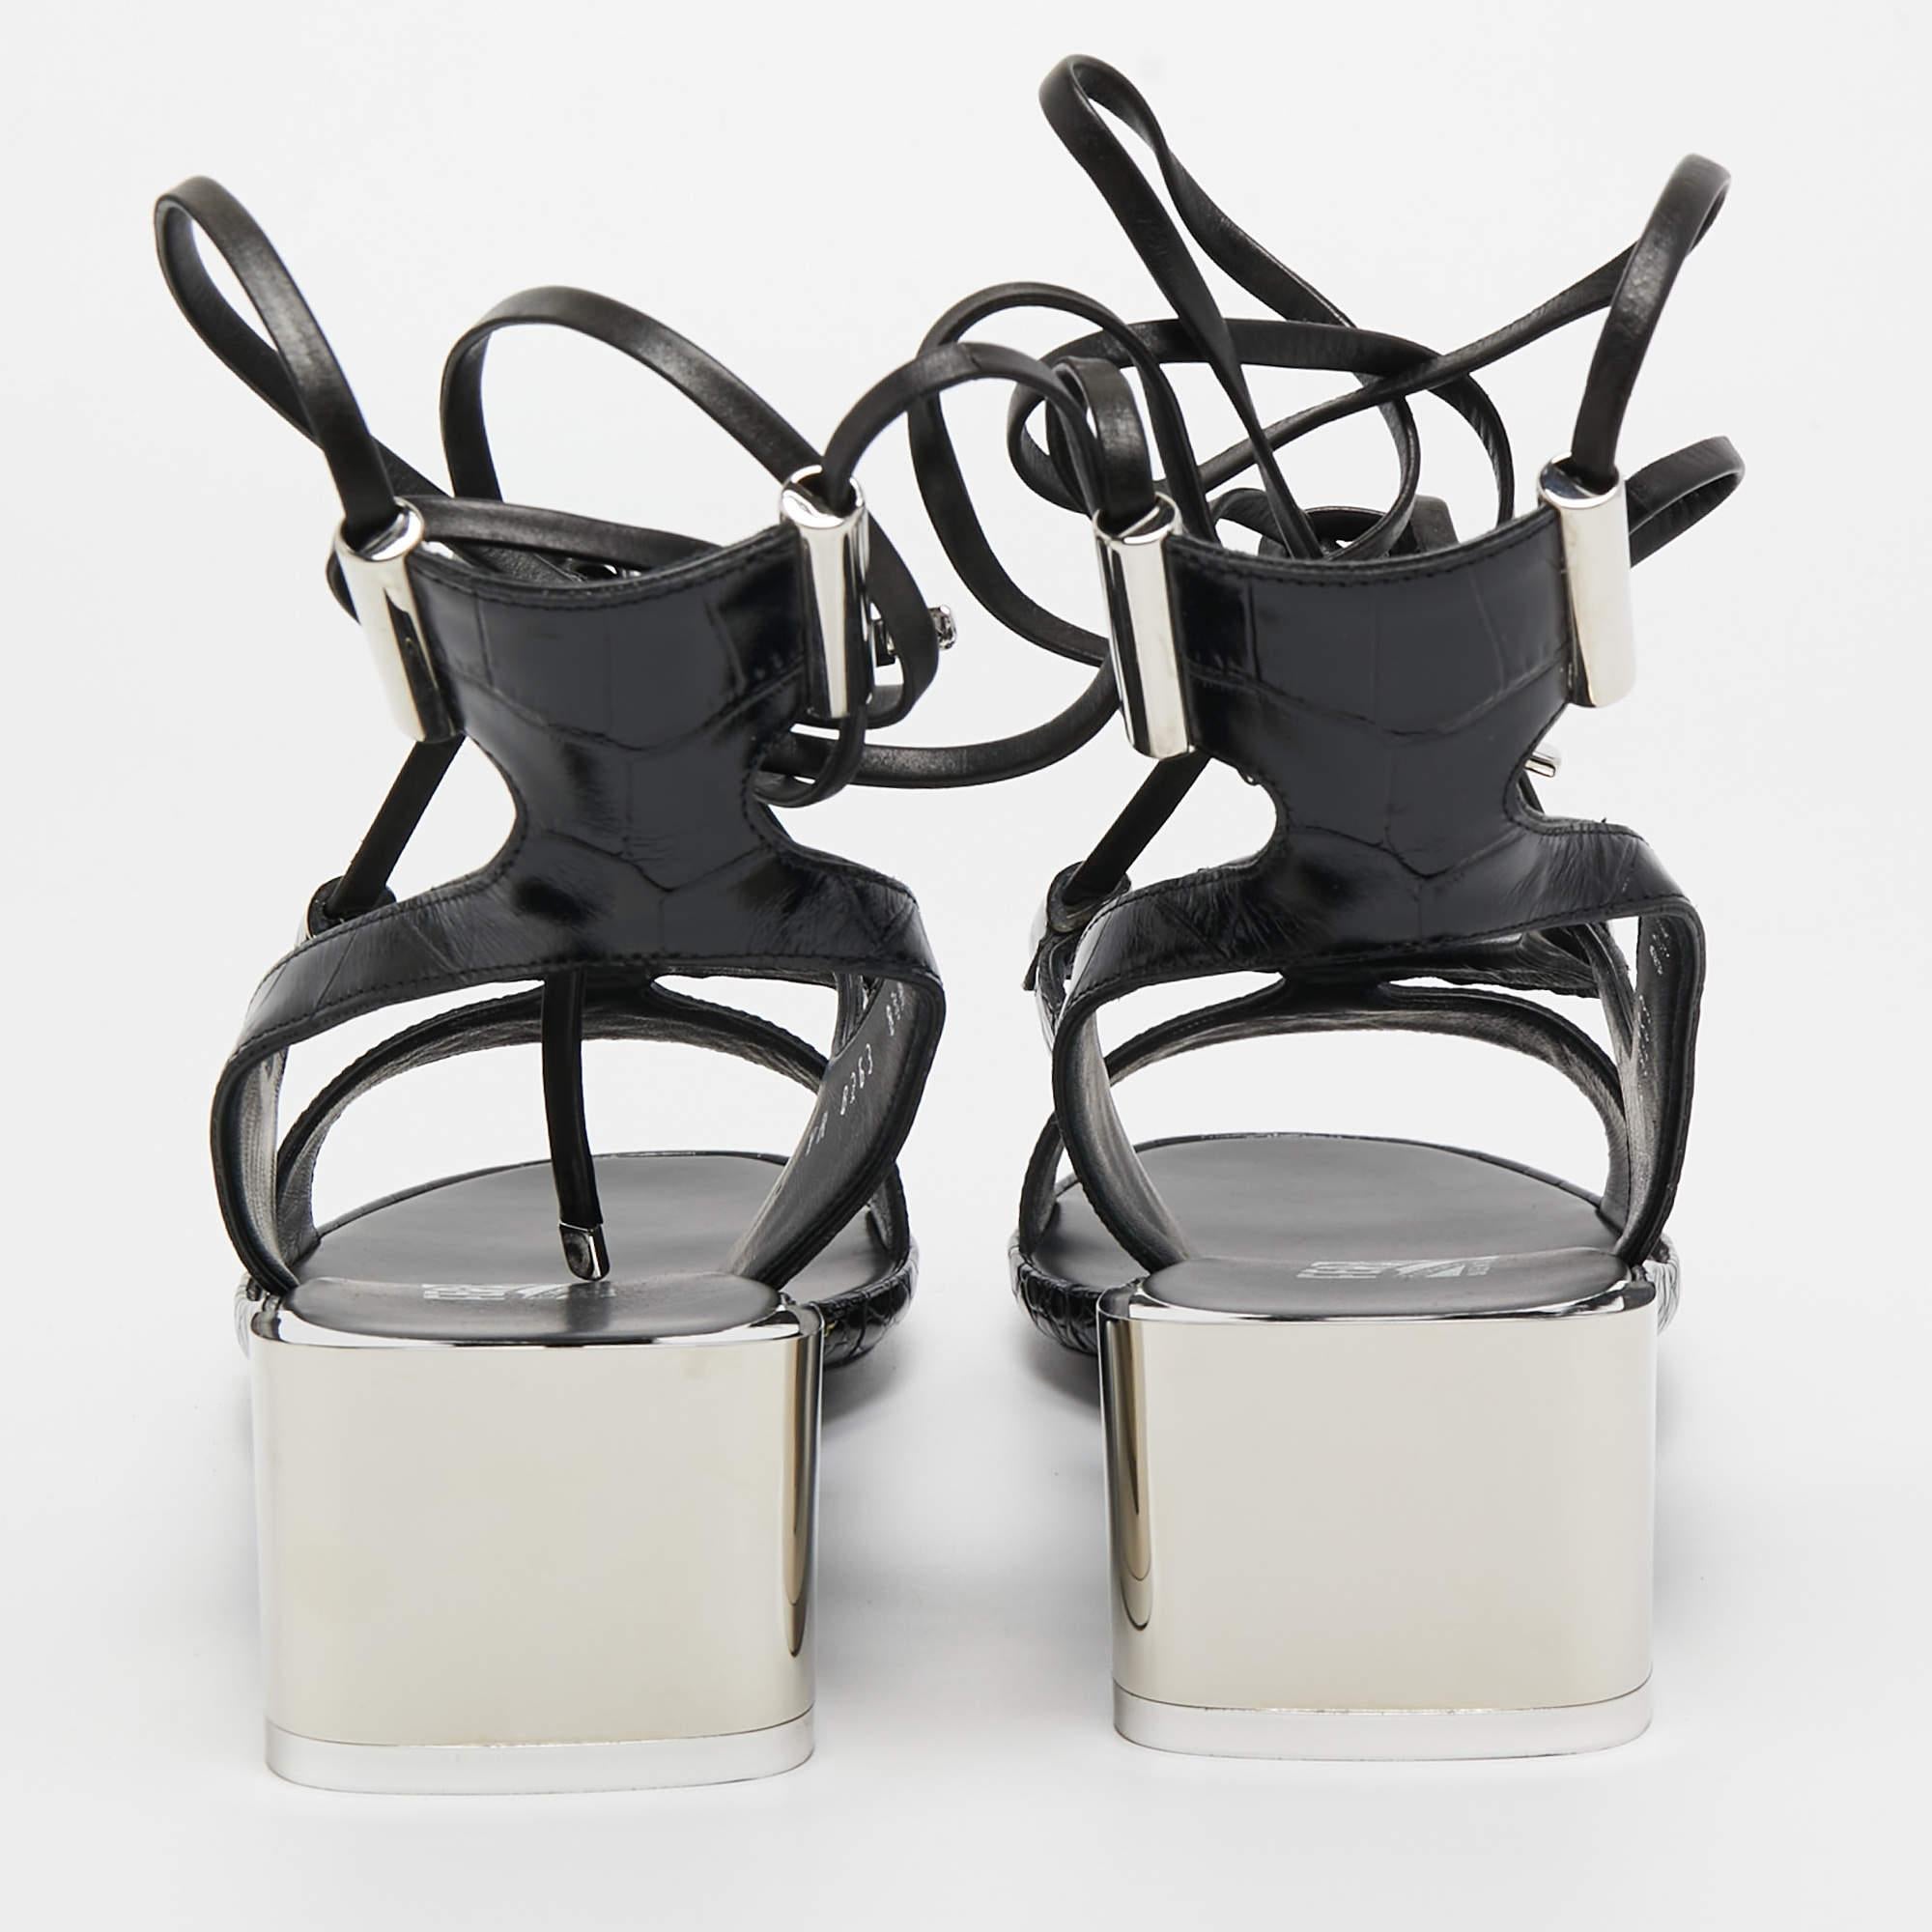 Salvatore Ferragamo Croc Embossed Leather Glorja Ankle Wrap Sandals Size 39 For Sale 2